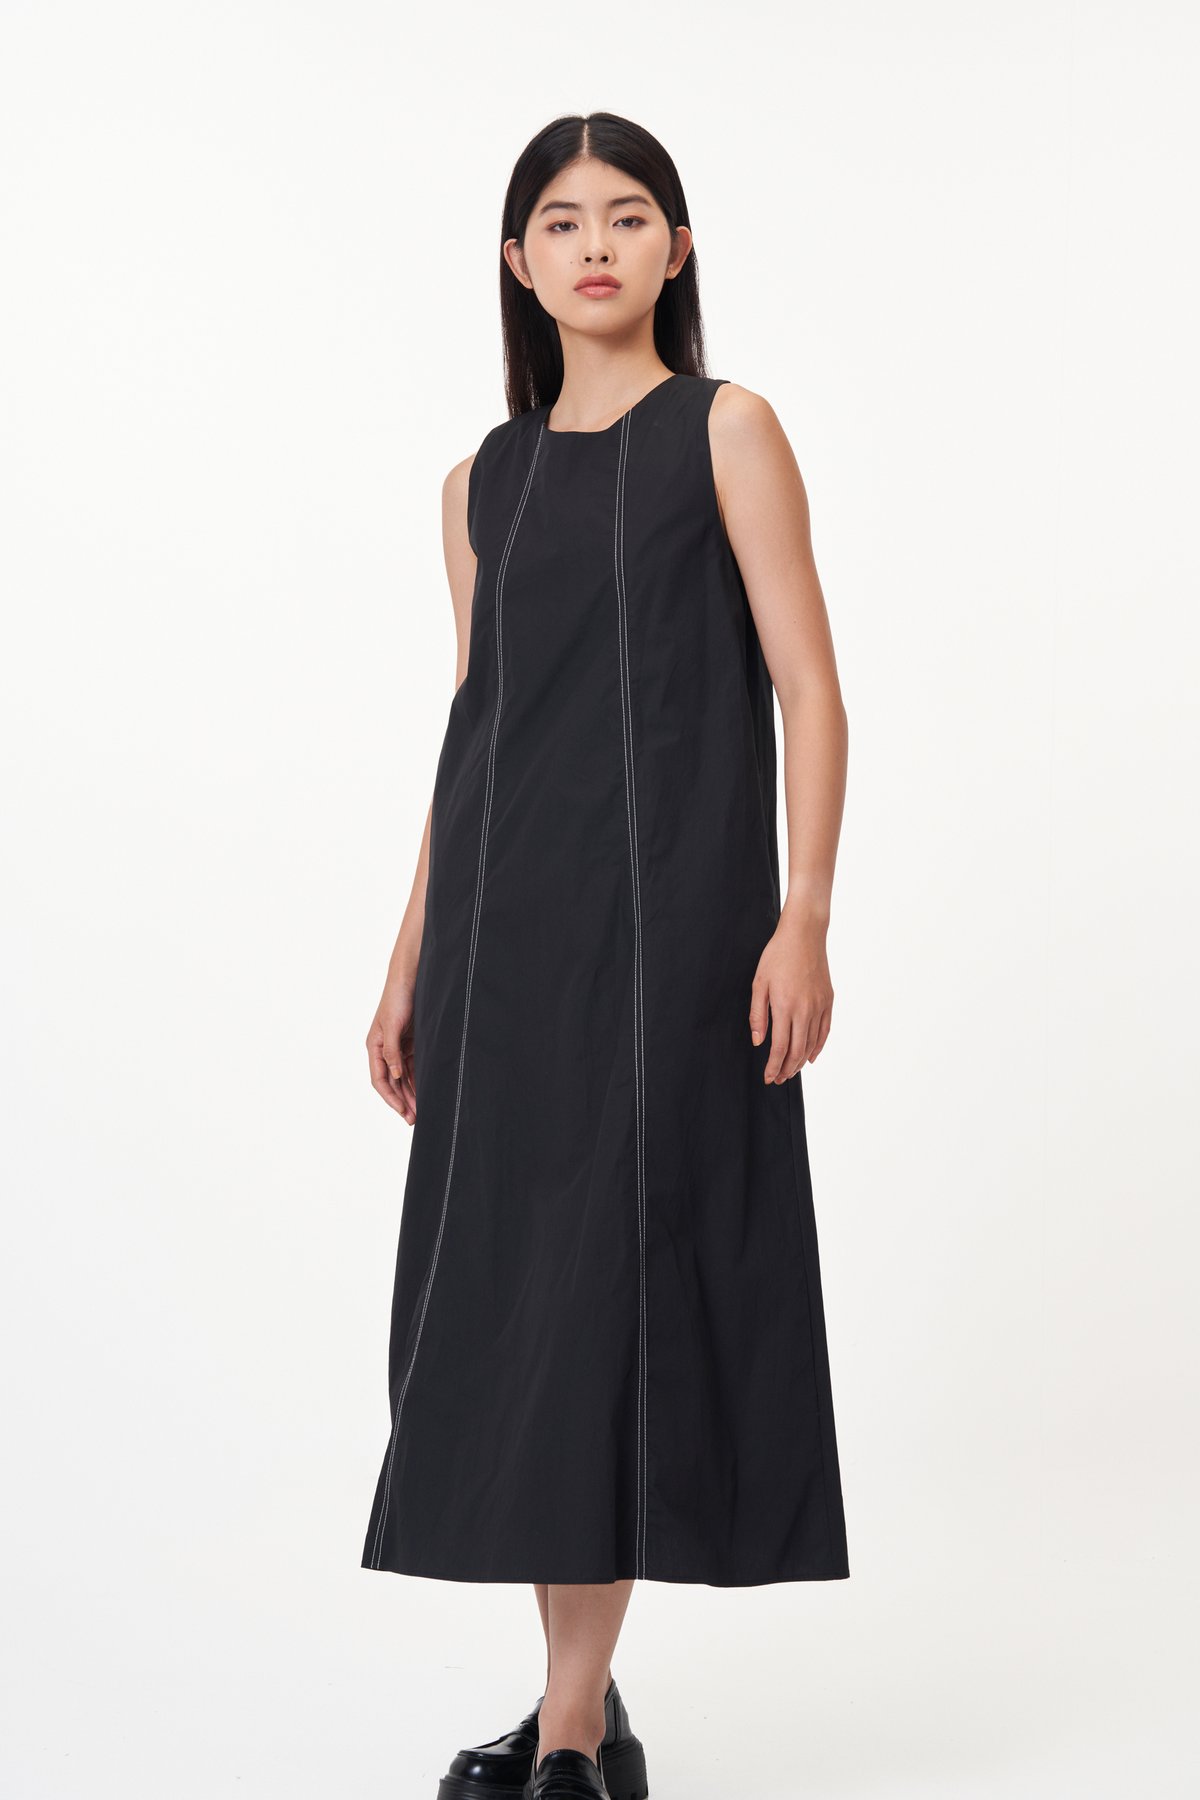 Khai Two Way Contrast Stitch Dress | The Closet Lover